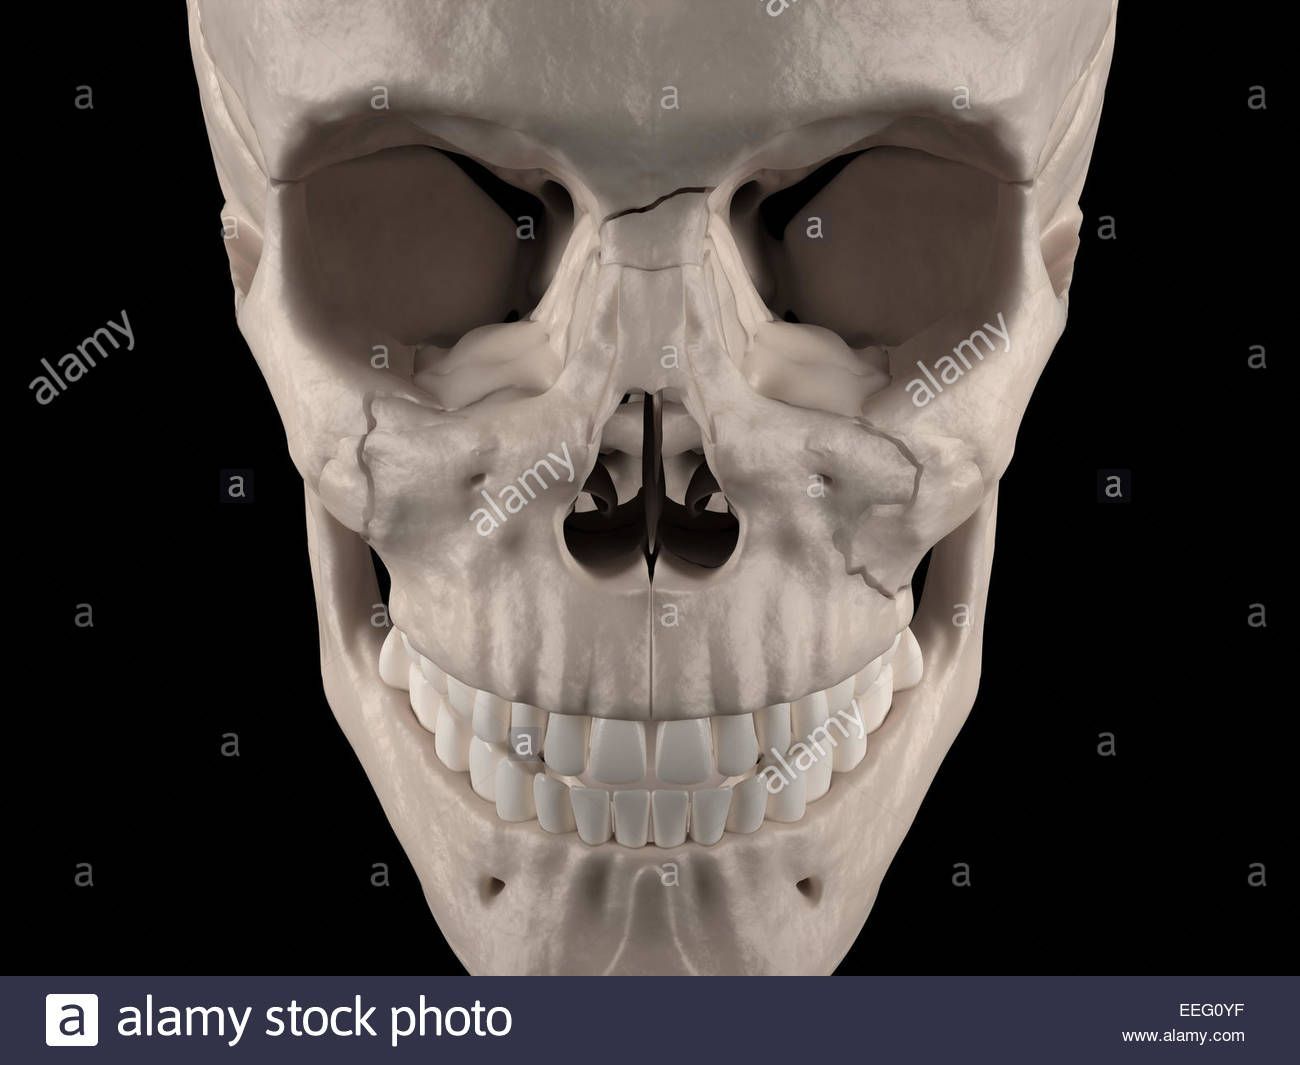 Complex facial fractures